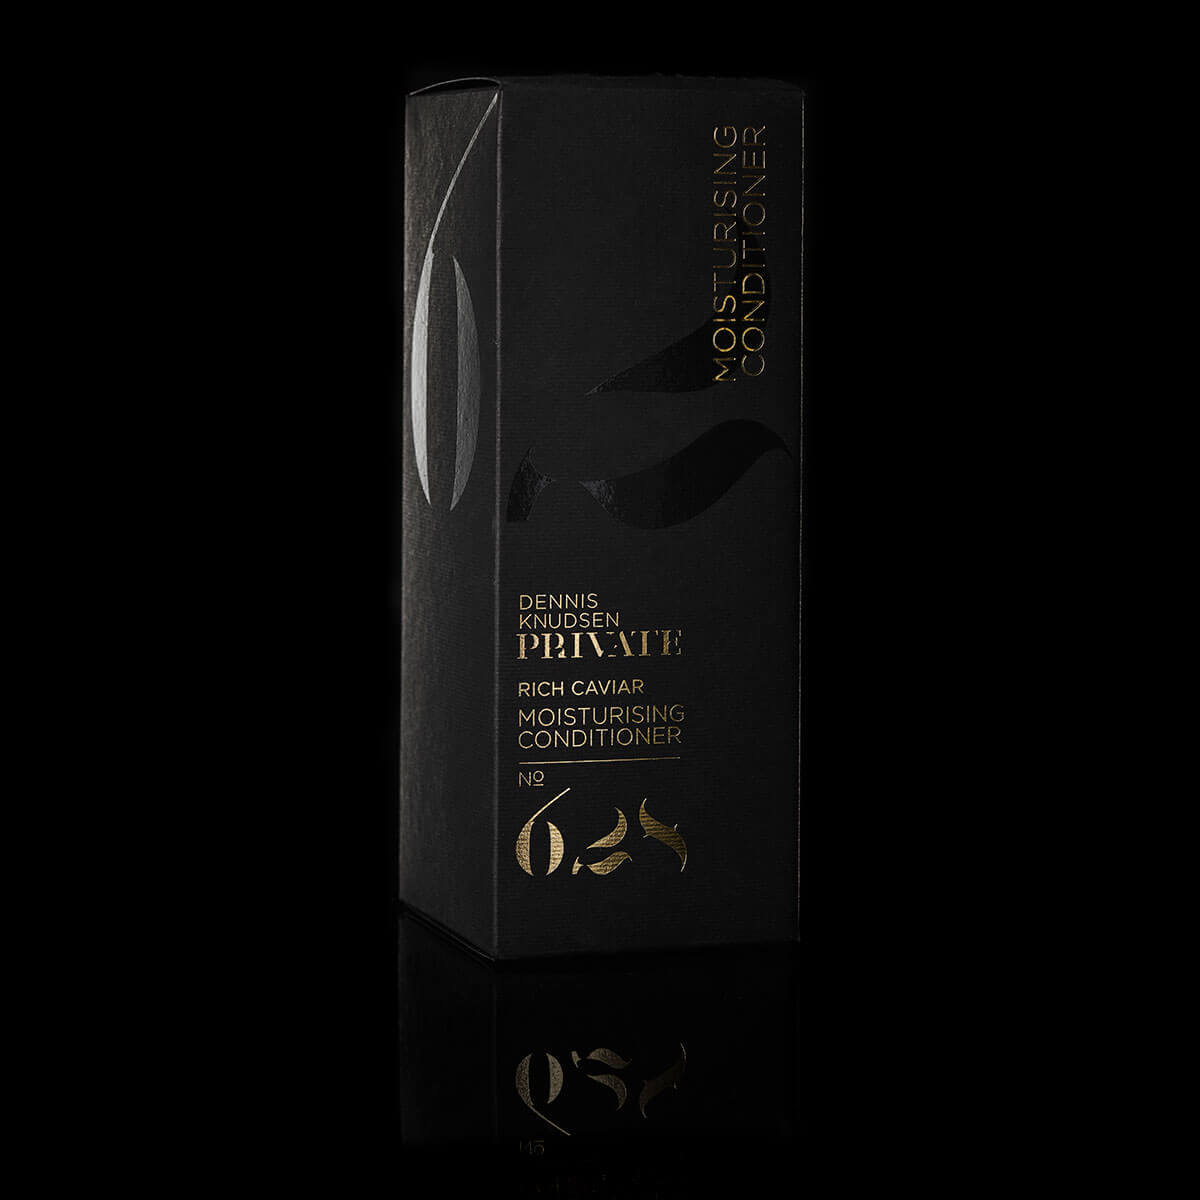 rich caviar moisturising conditioner 628 dennis knudsen private box side